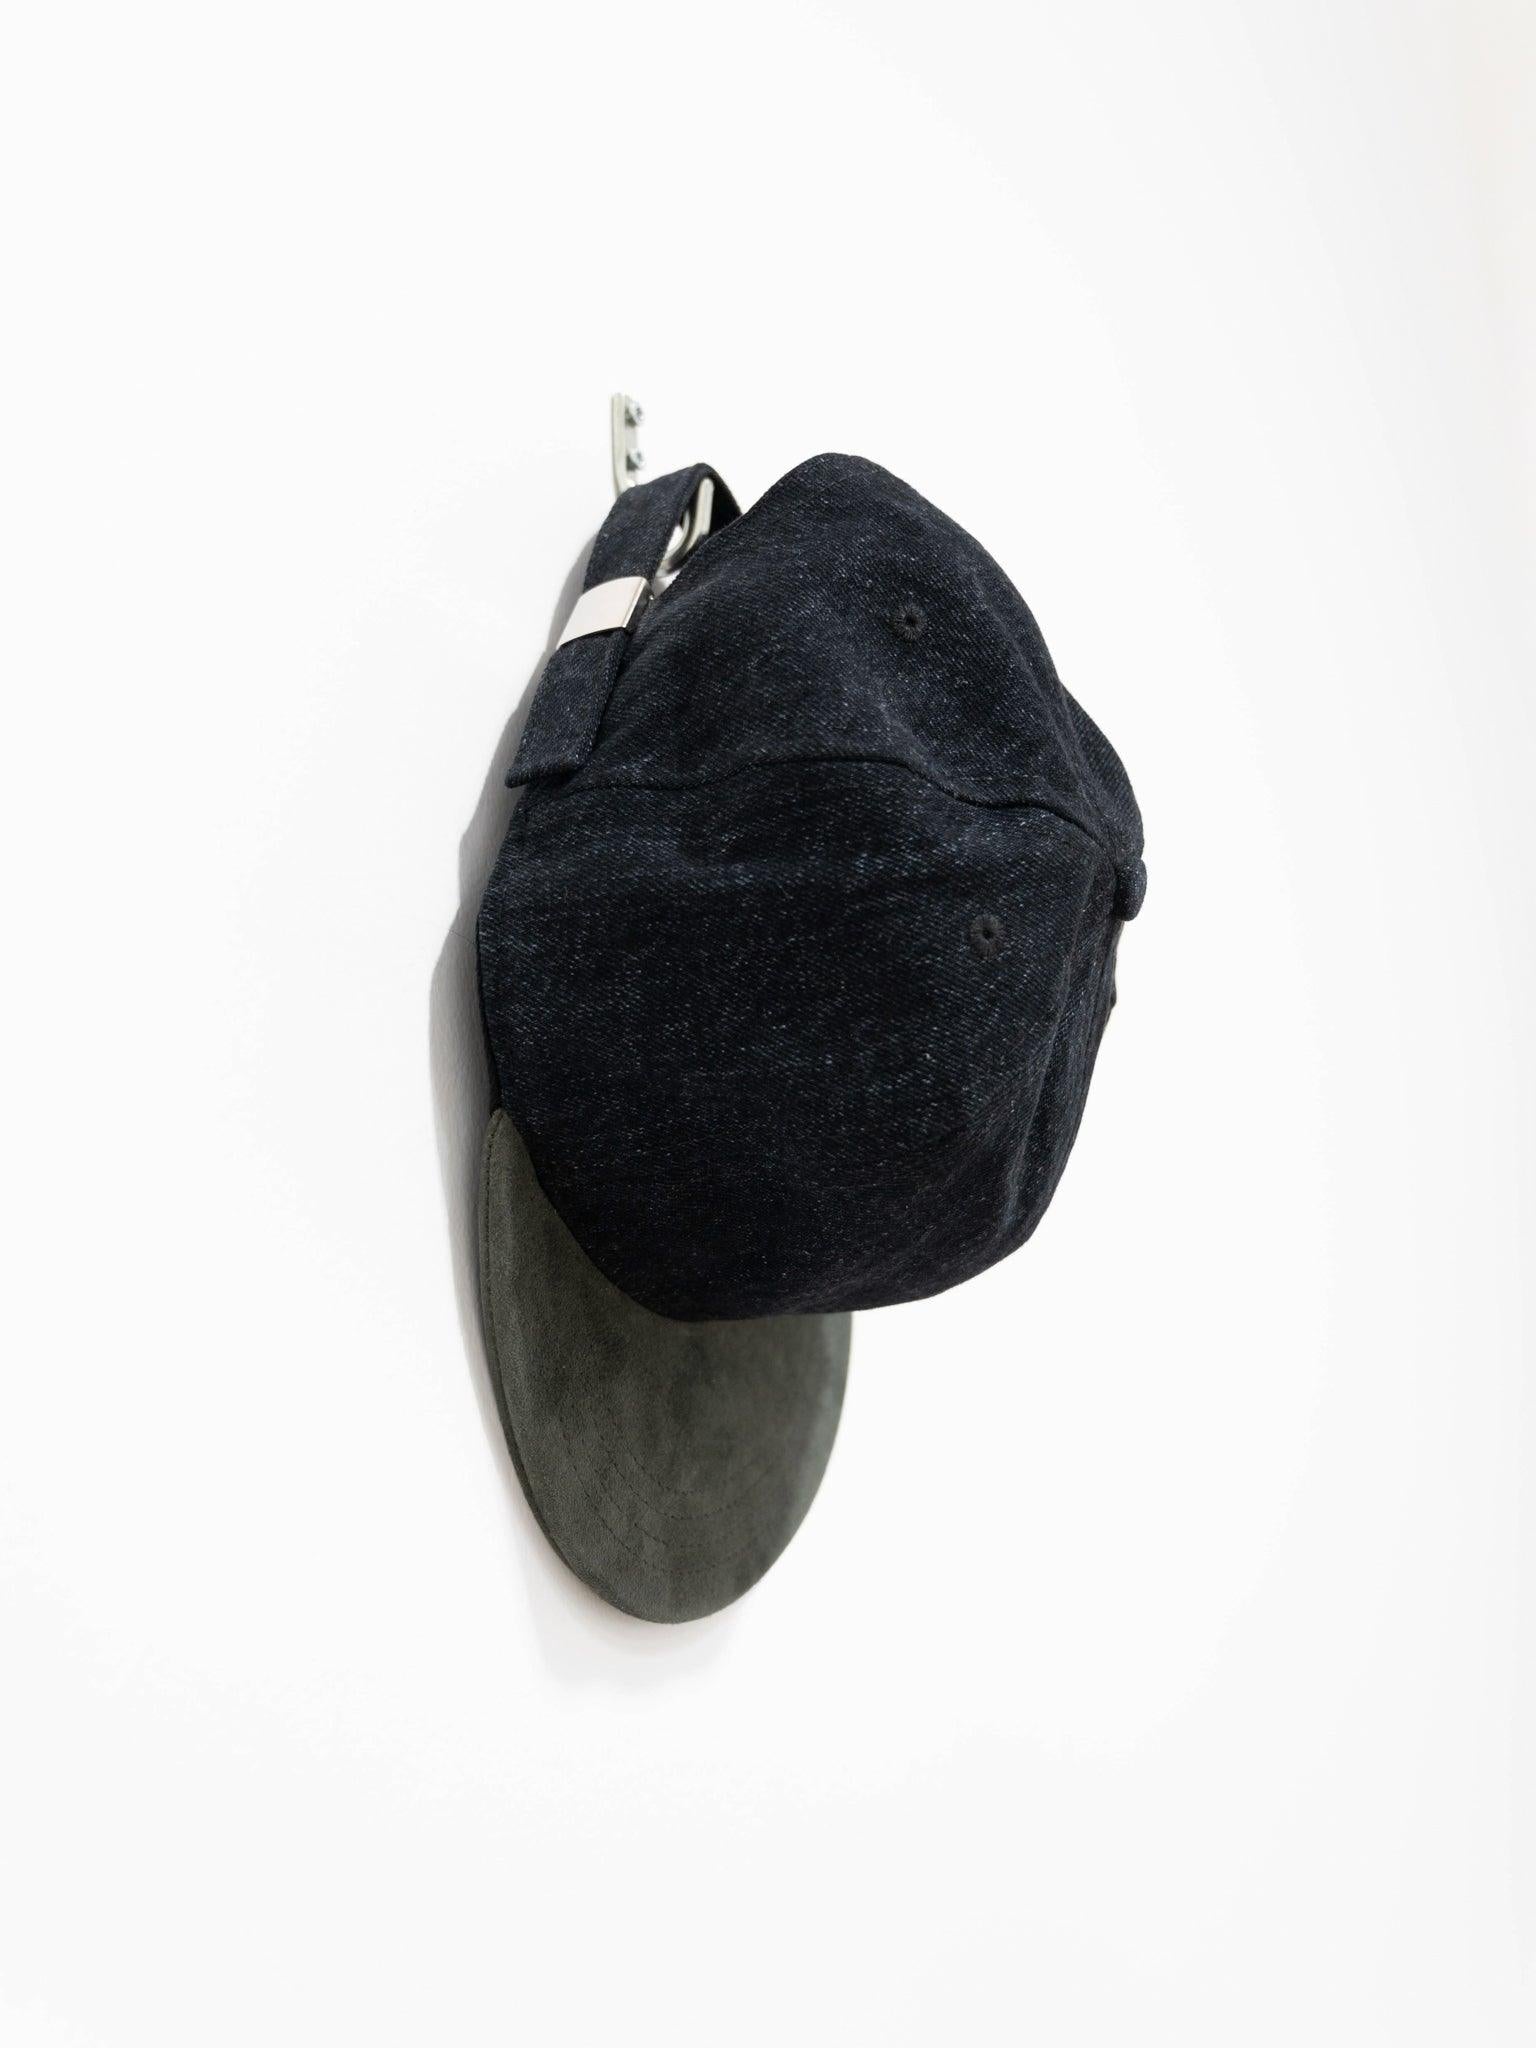 Namu Shop - paa Ball Cap Three - Black Wash